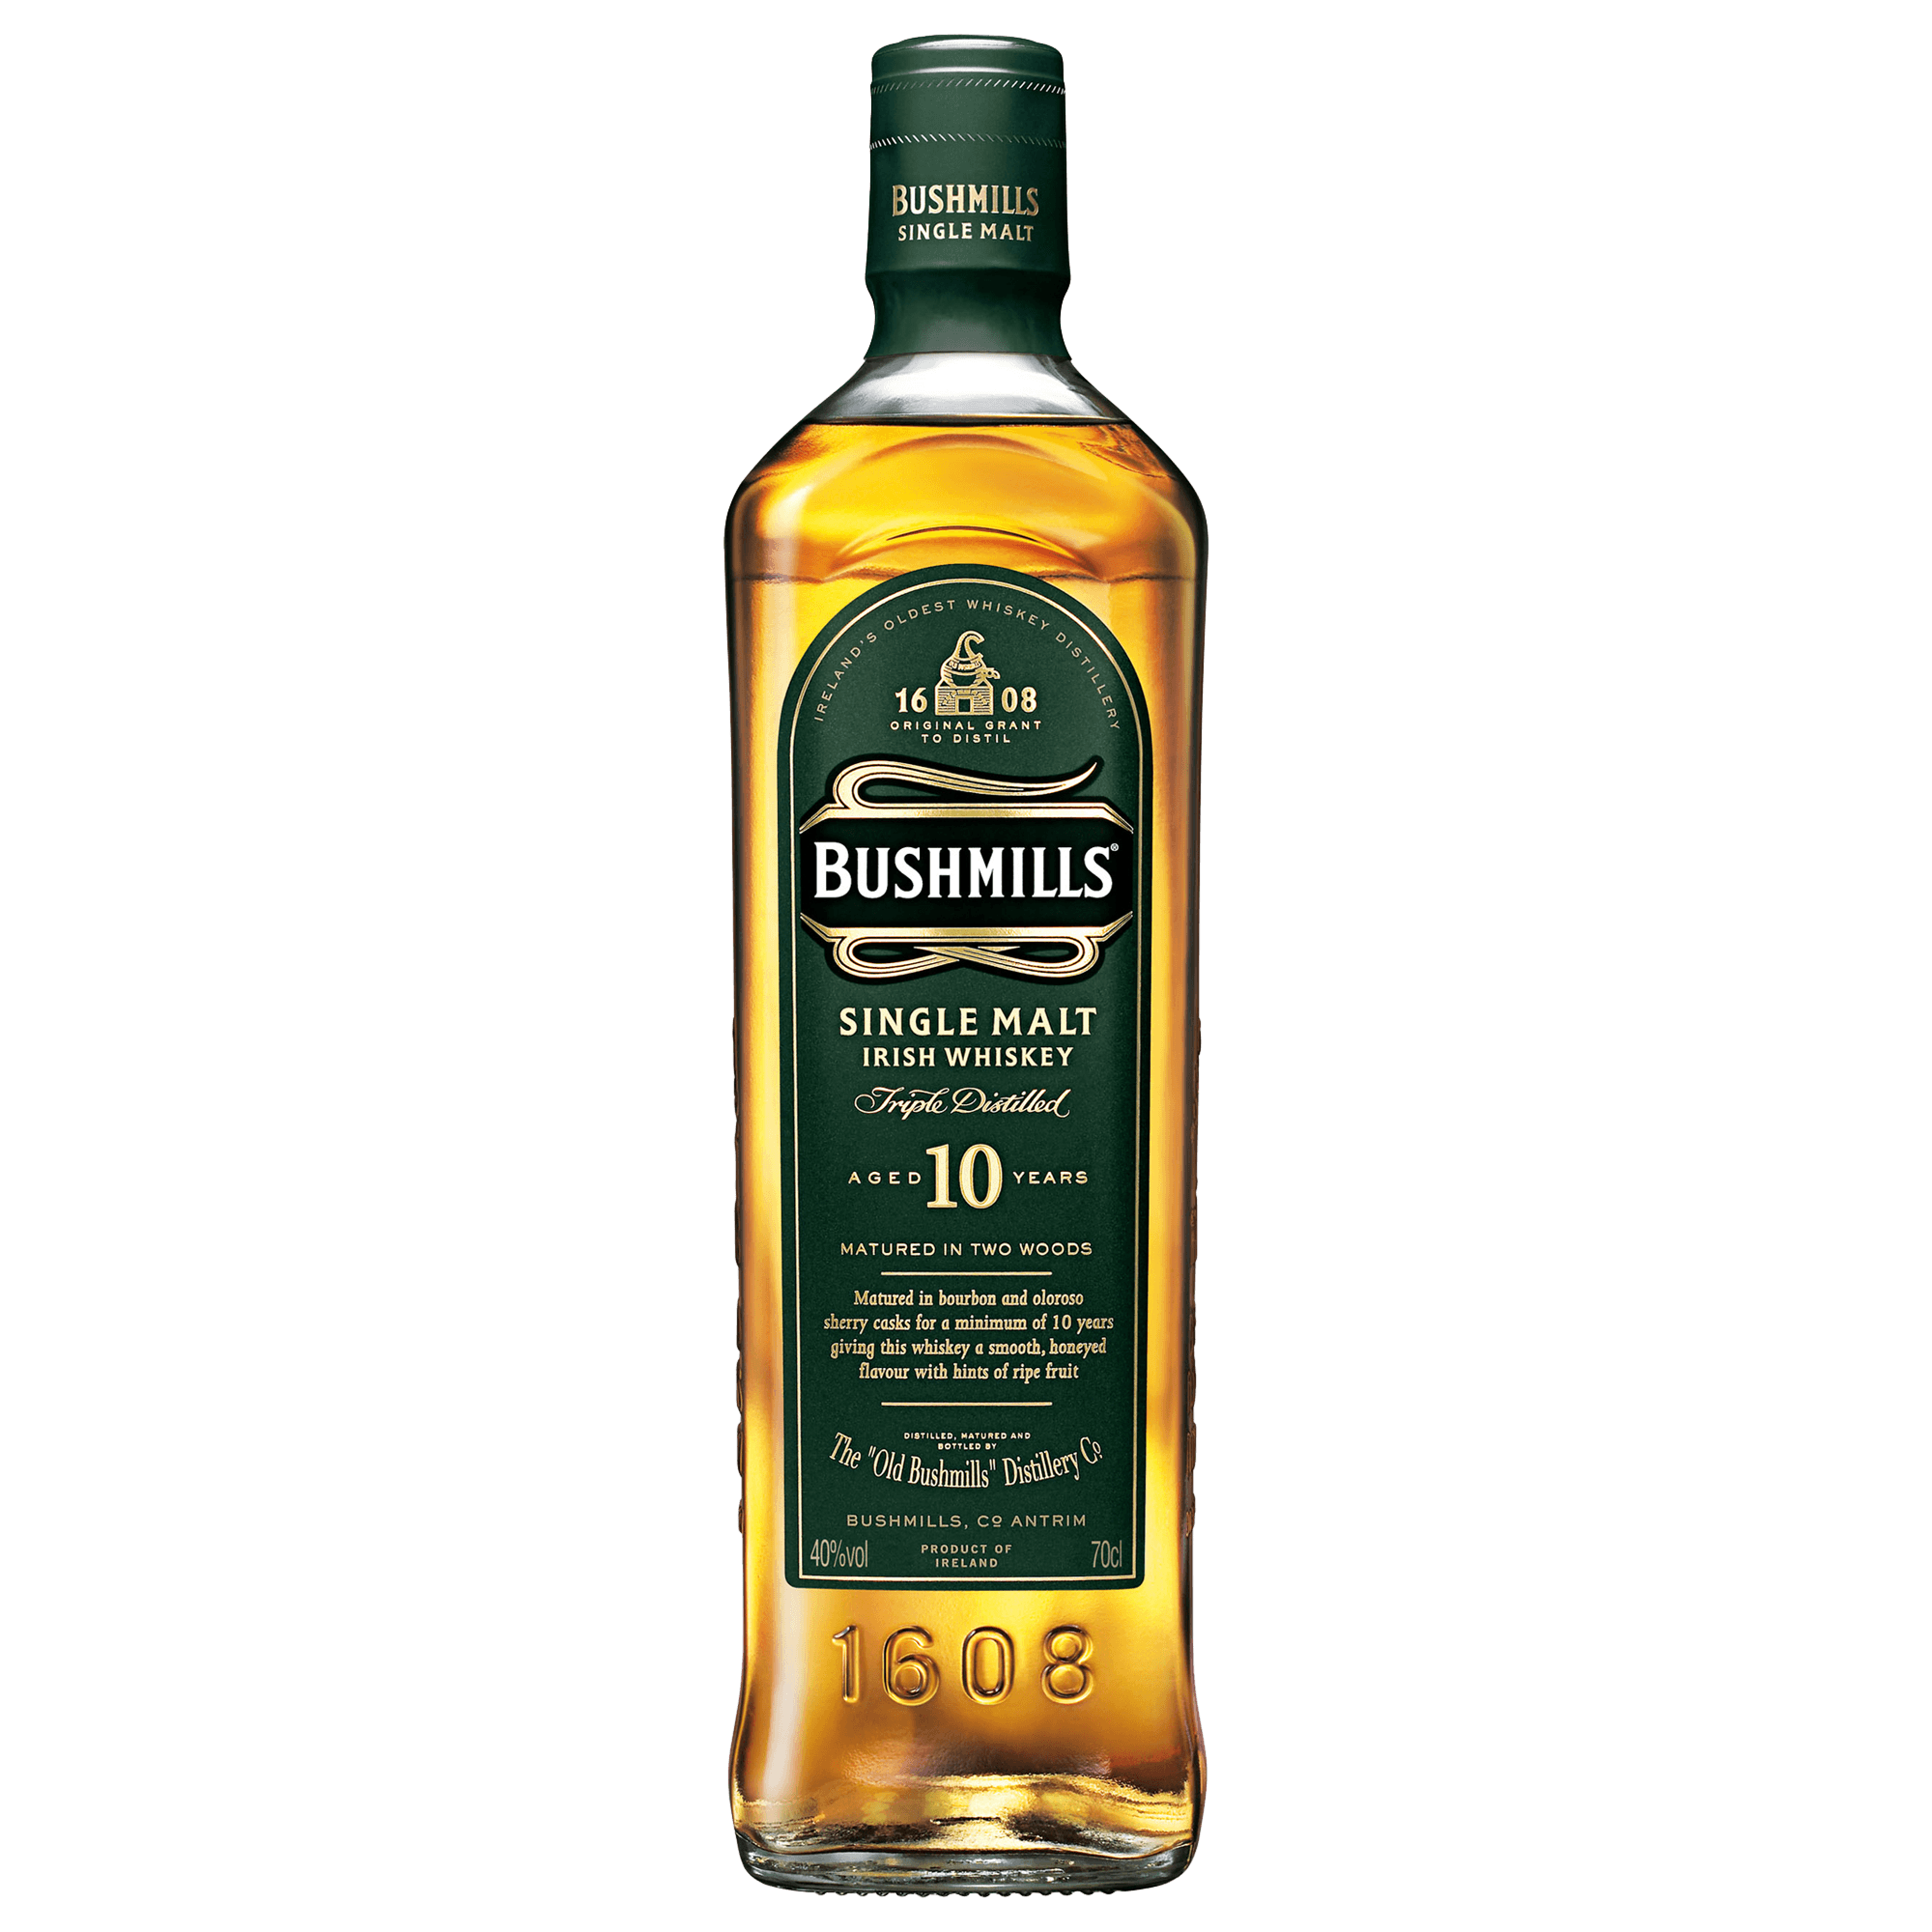 Single malt 10. Bushmills Irish Whiskey 1608. Виски Bushmills Single Malt 10 лет. Bushmills Single Malt Irish Whiskey. Виски Bushmills Single Malt 10 лет 16 лет 21 год.